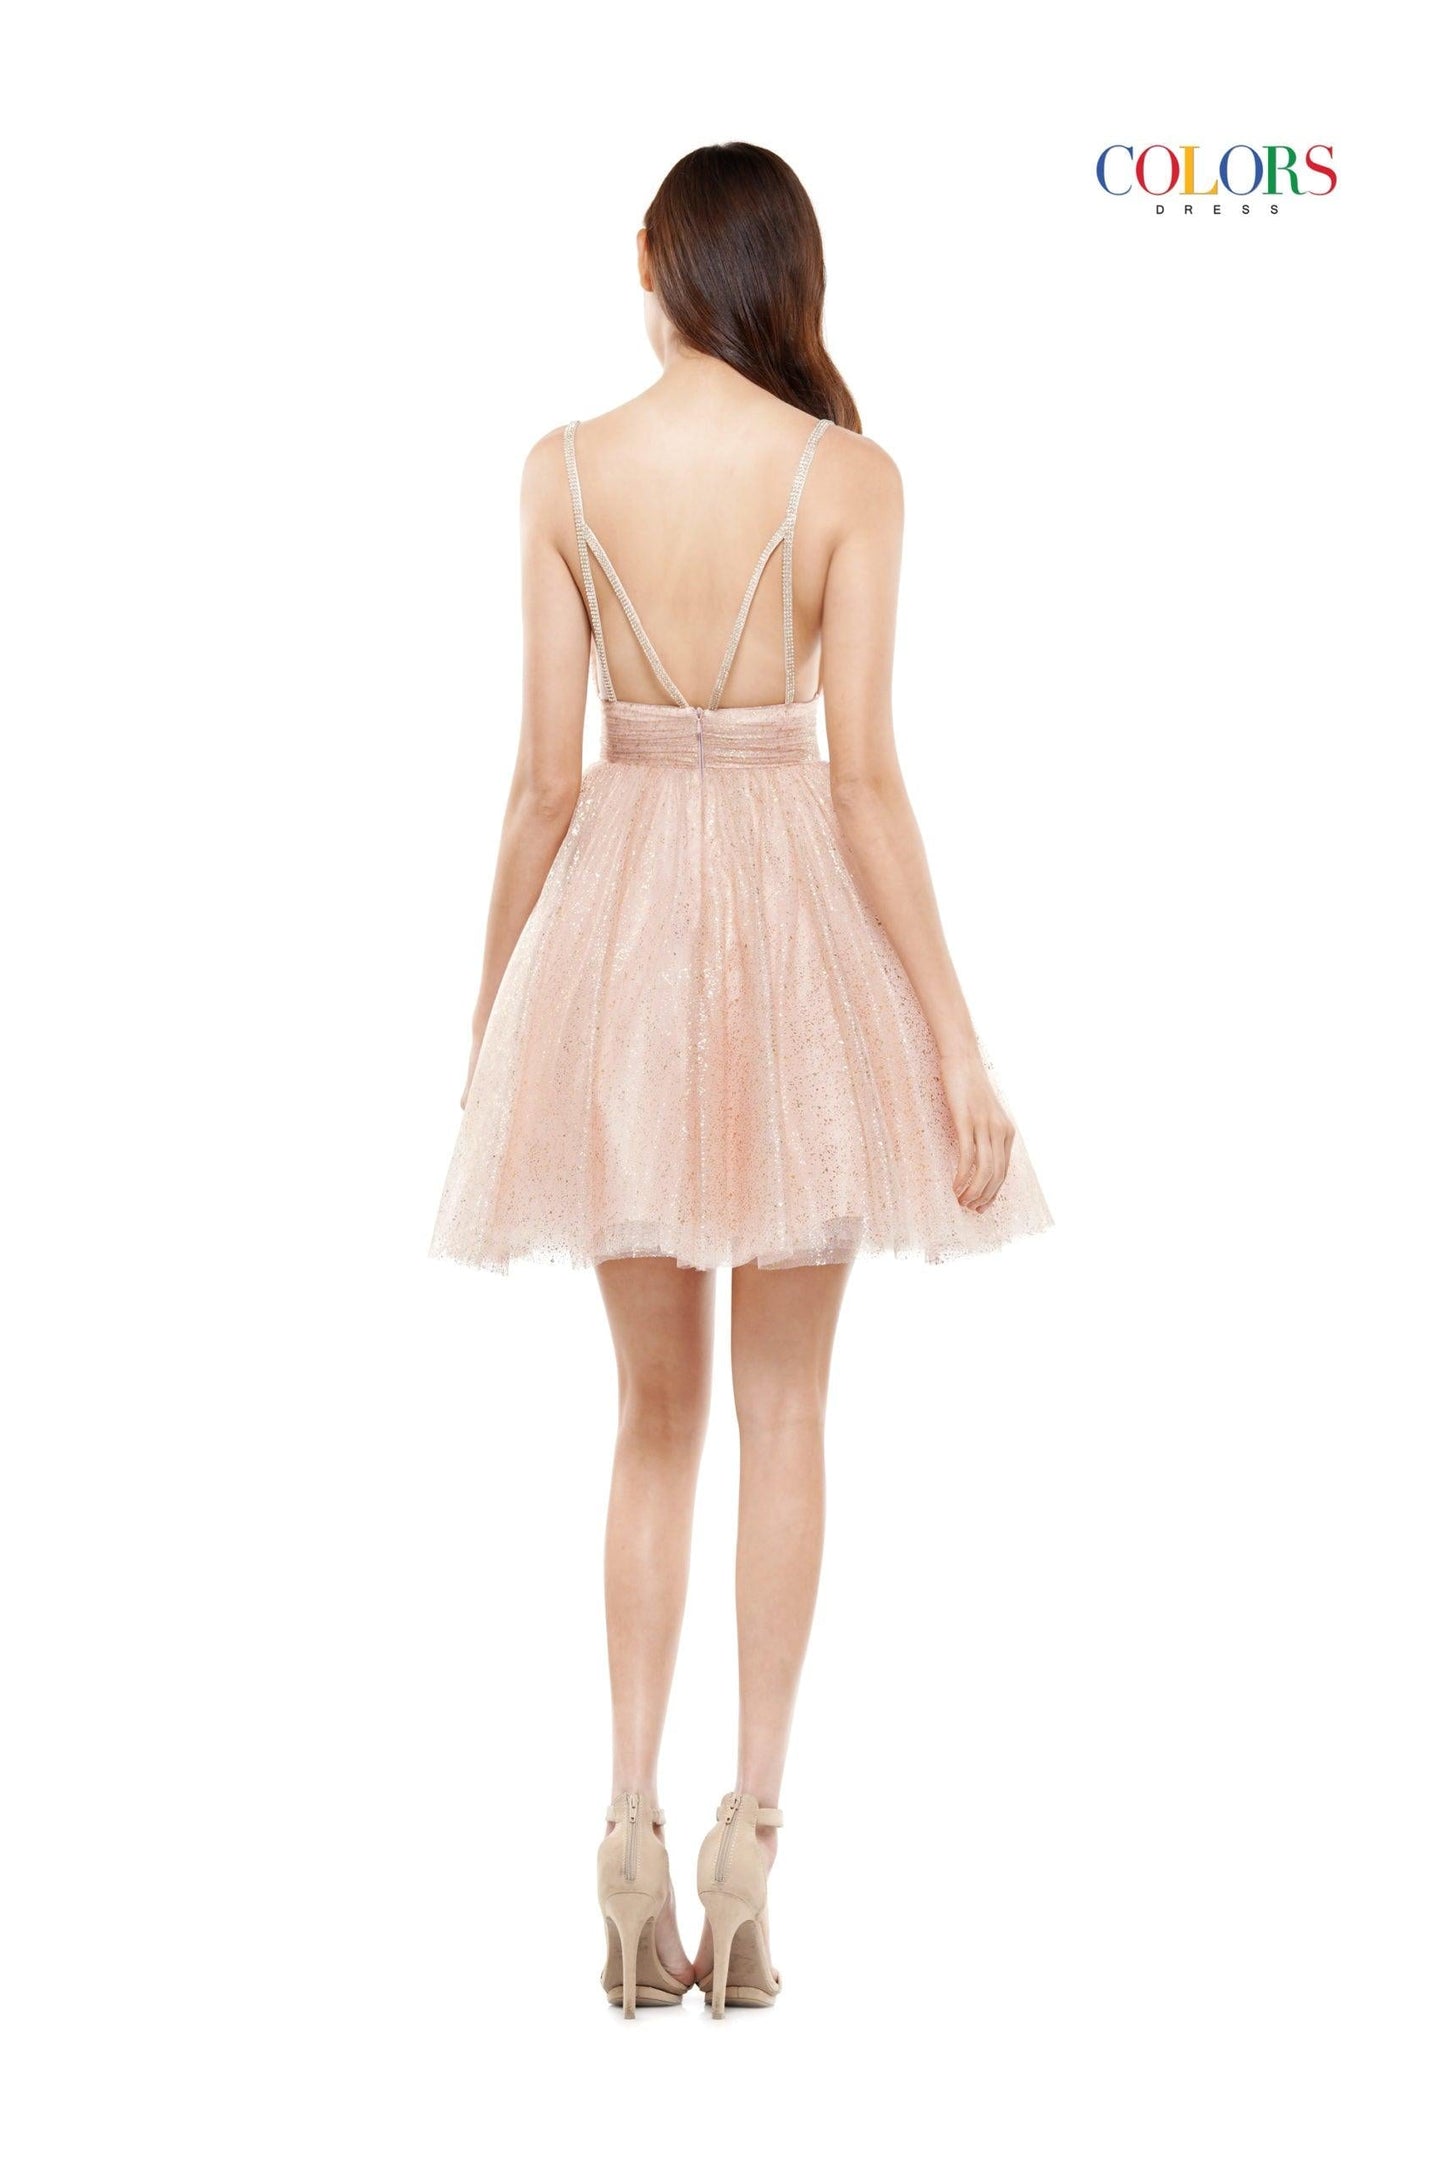 Colors Prom Short Spaghetti Strap Mesh Dress 2412 - The Dress Outlet